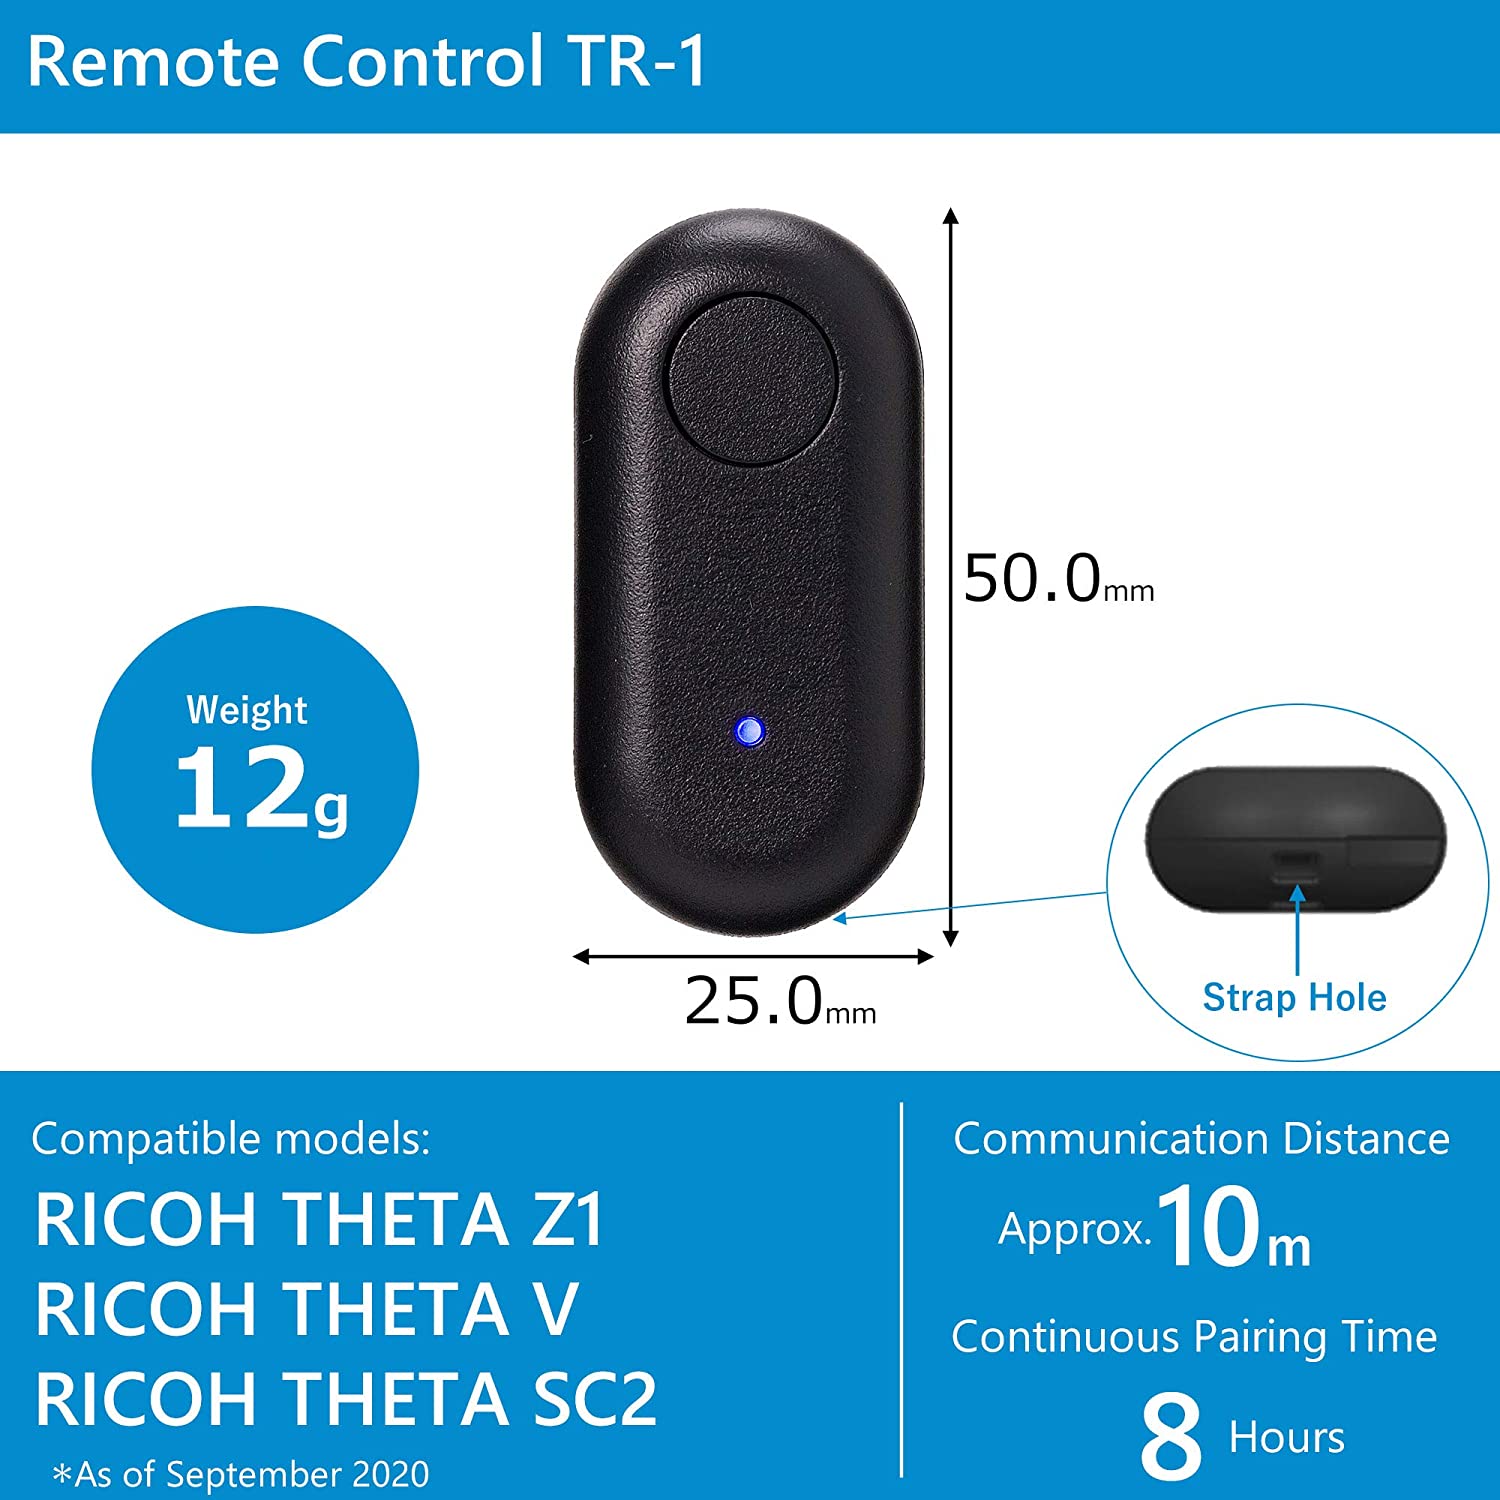 RICOH THETA - Remote Control TR-1